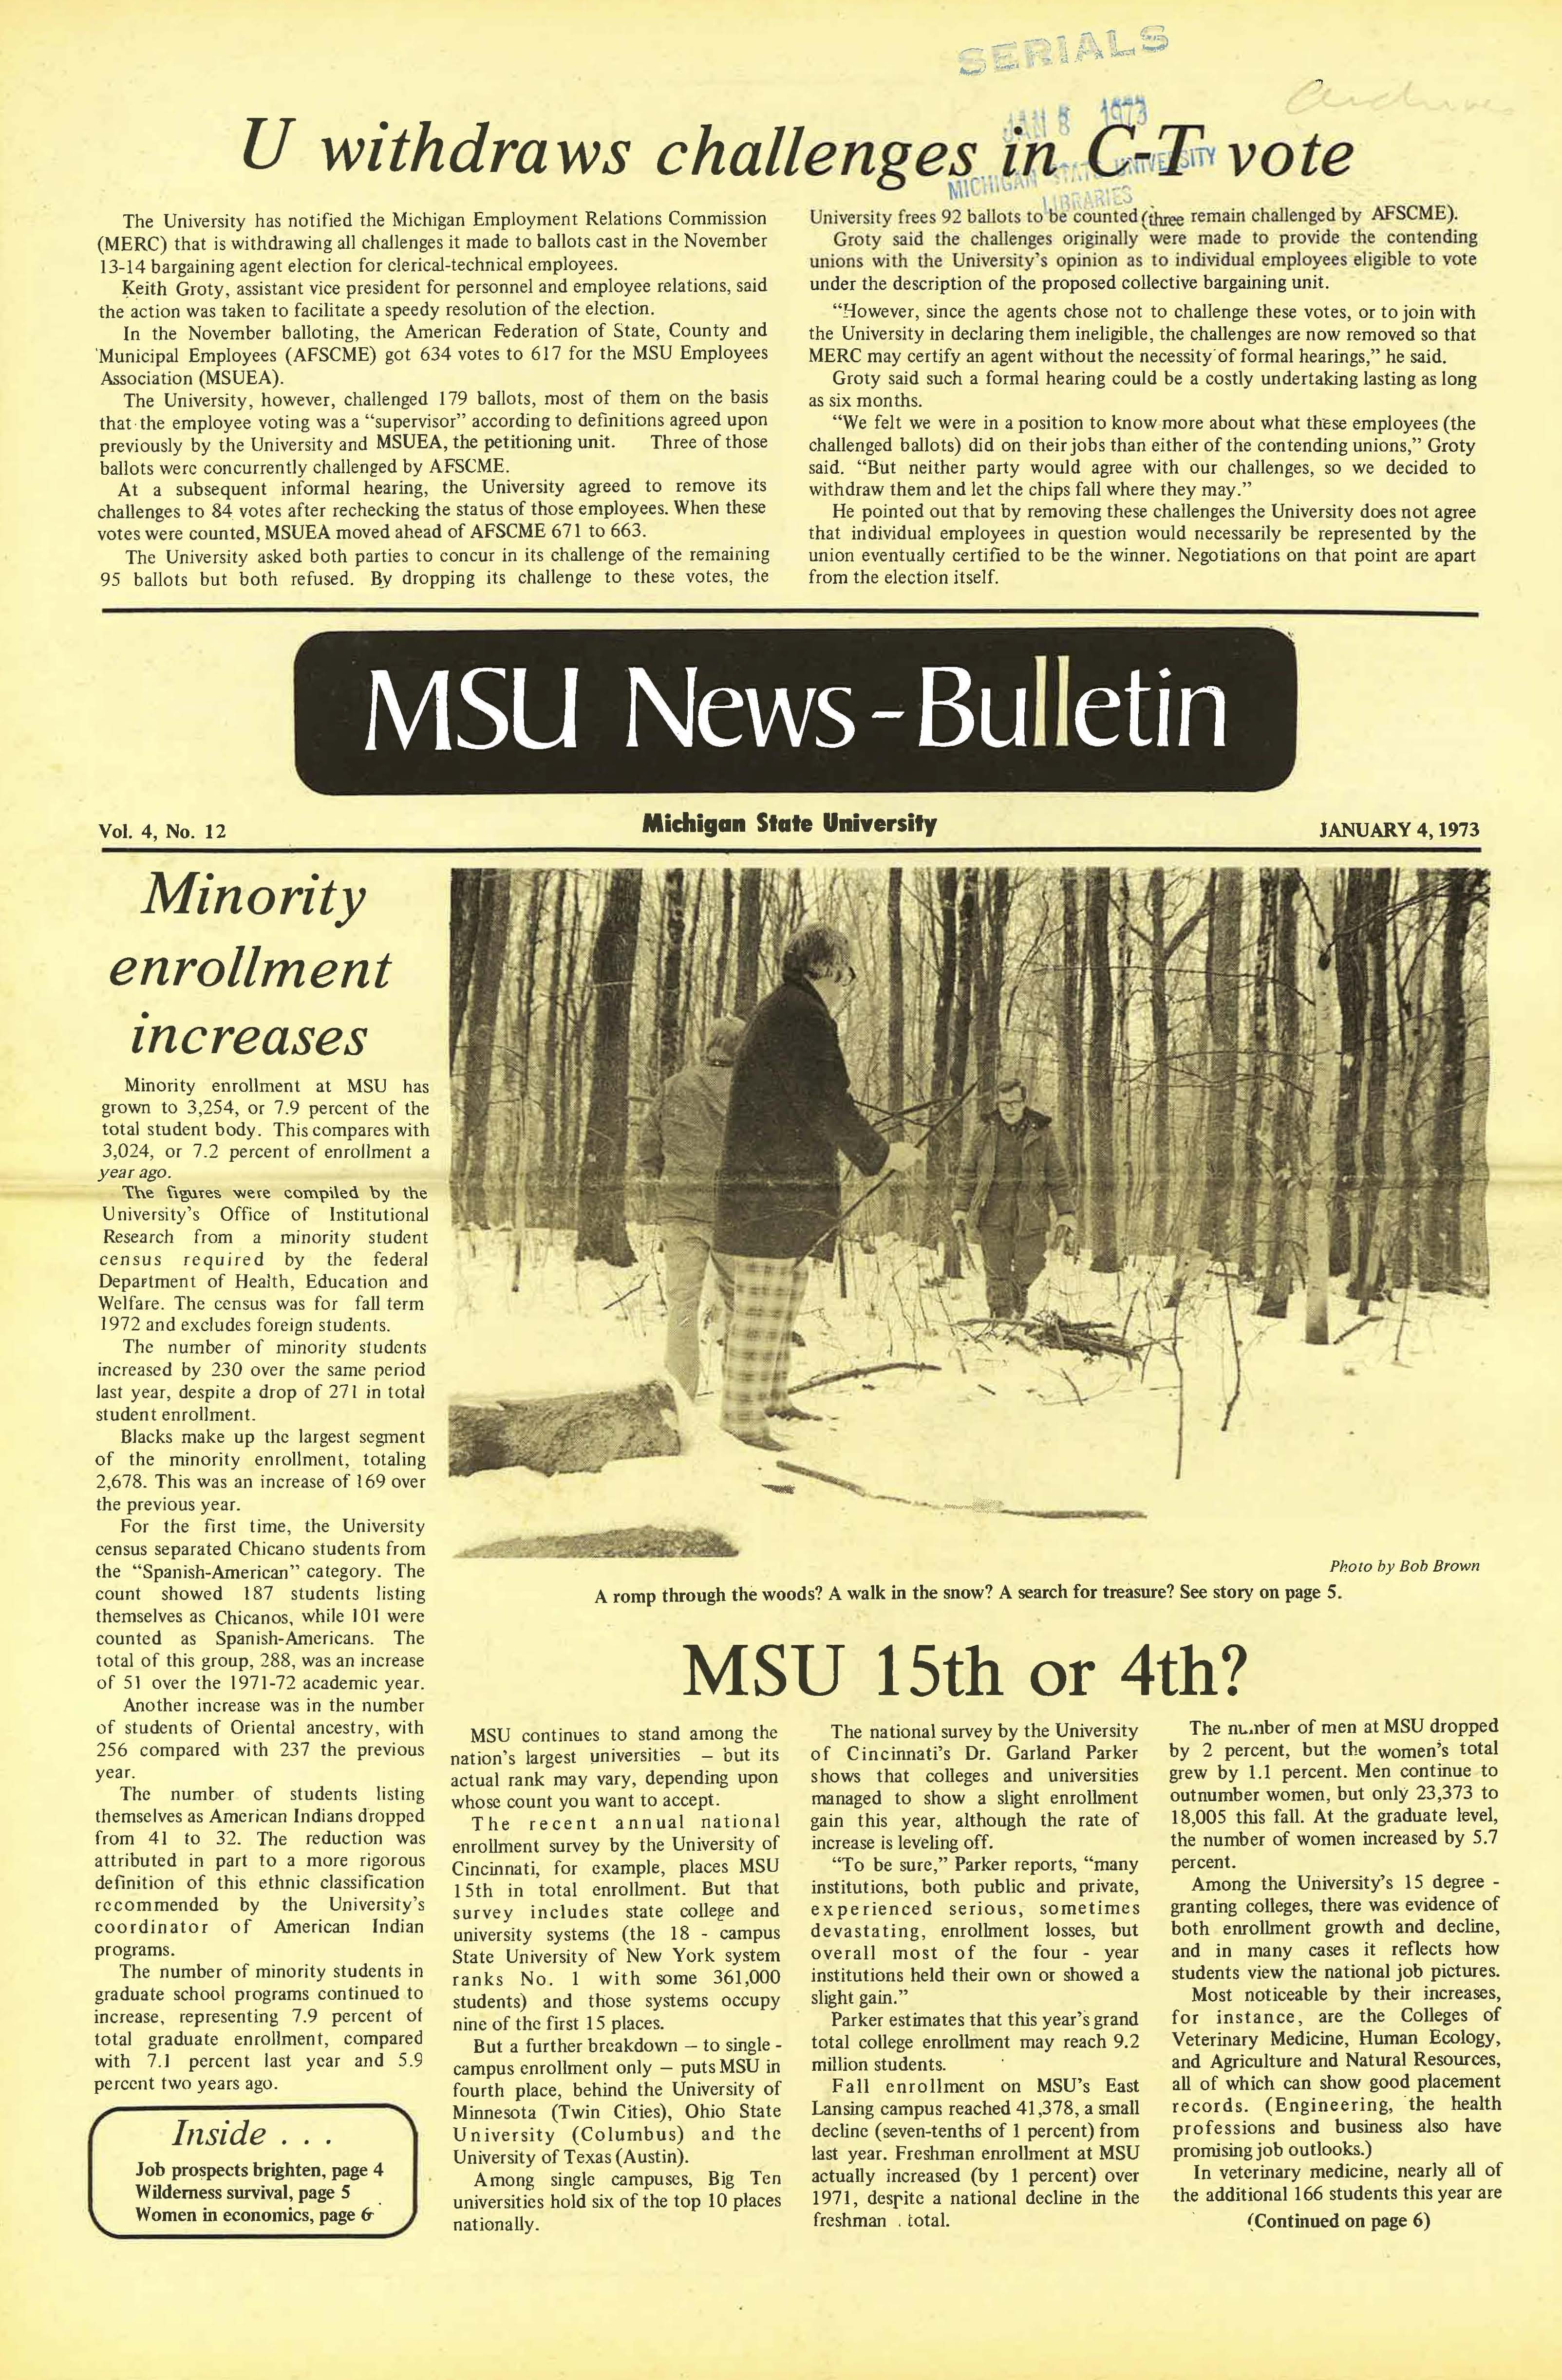 MSU News Bulletin, vol. 4, No. 19, February 22, 1973